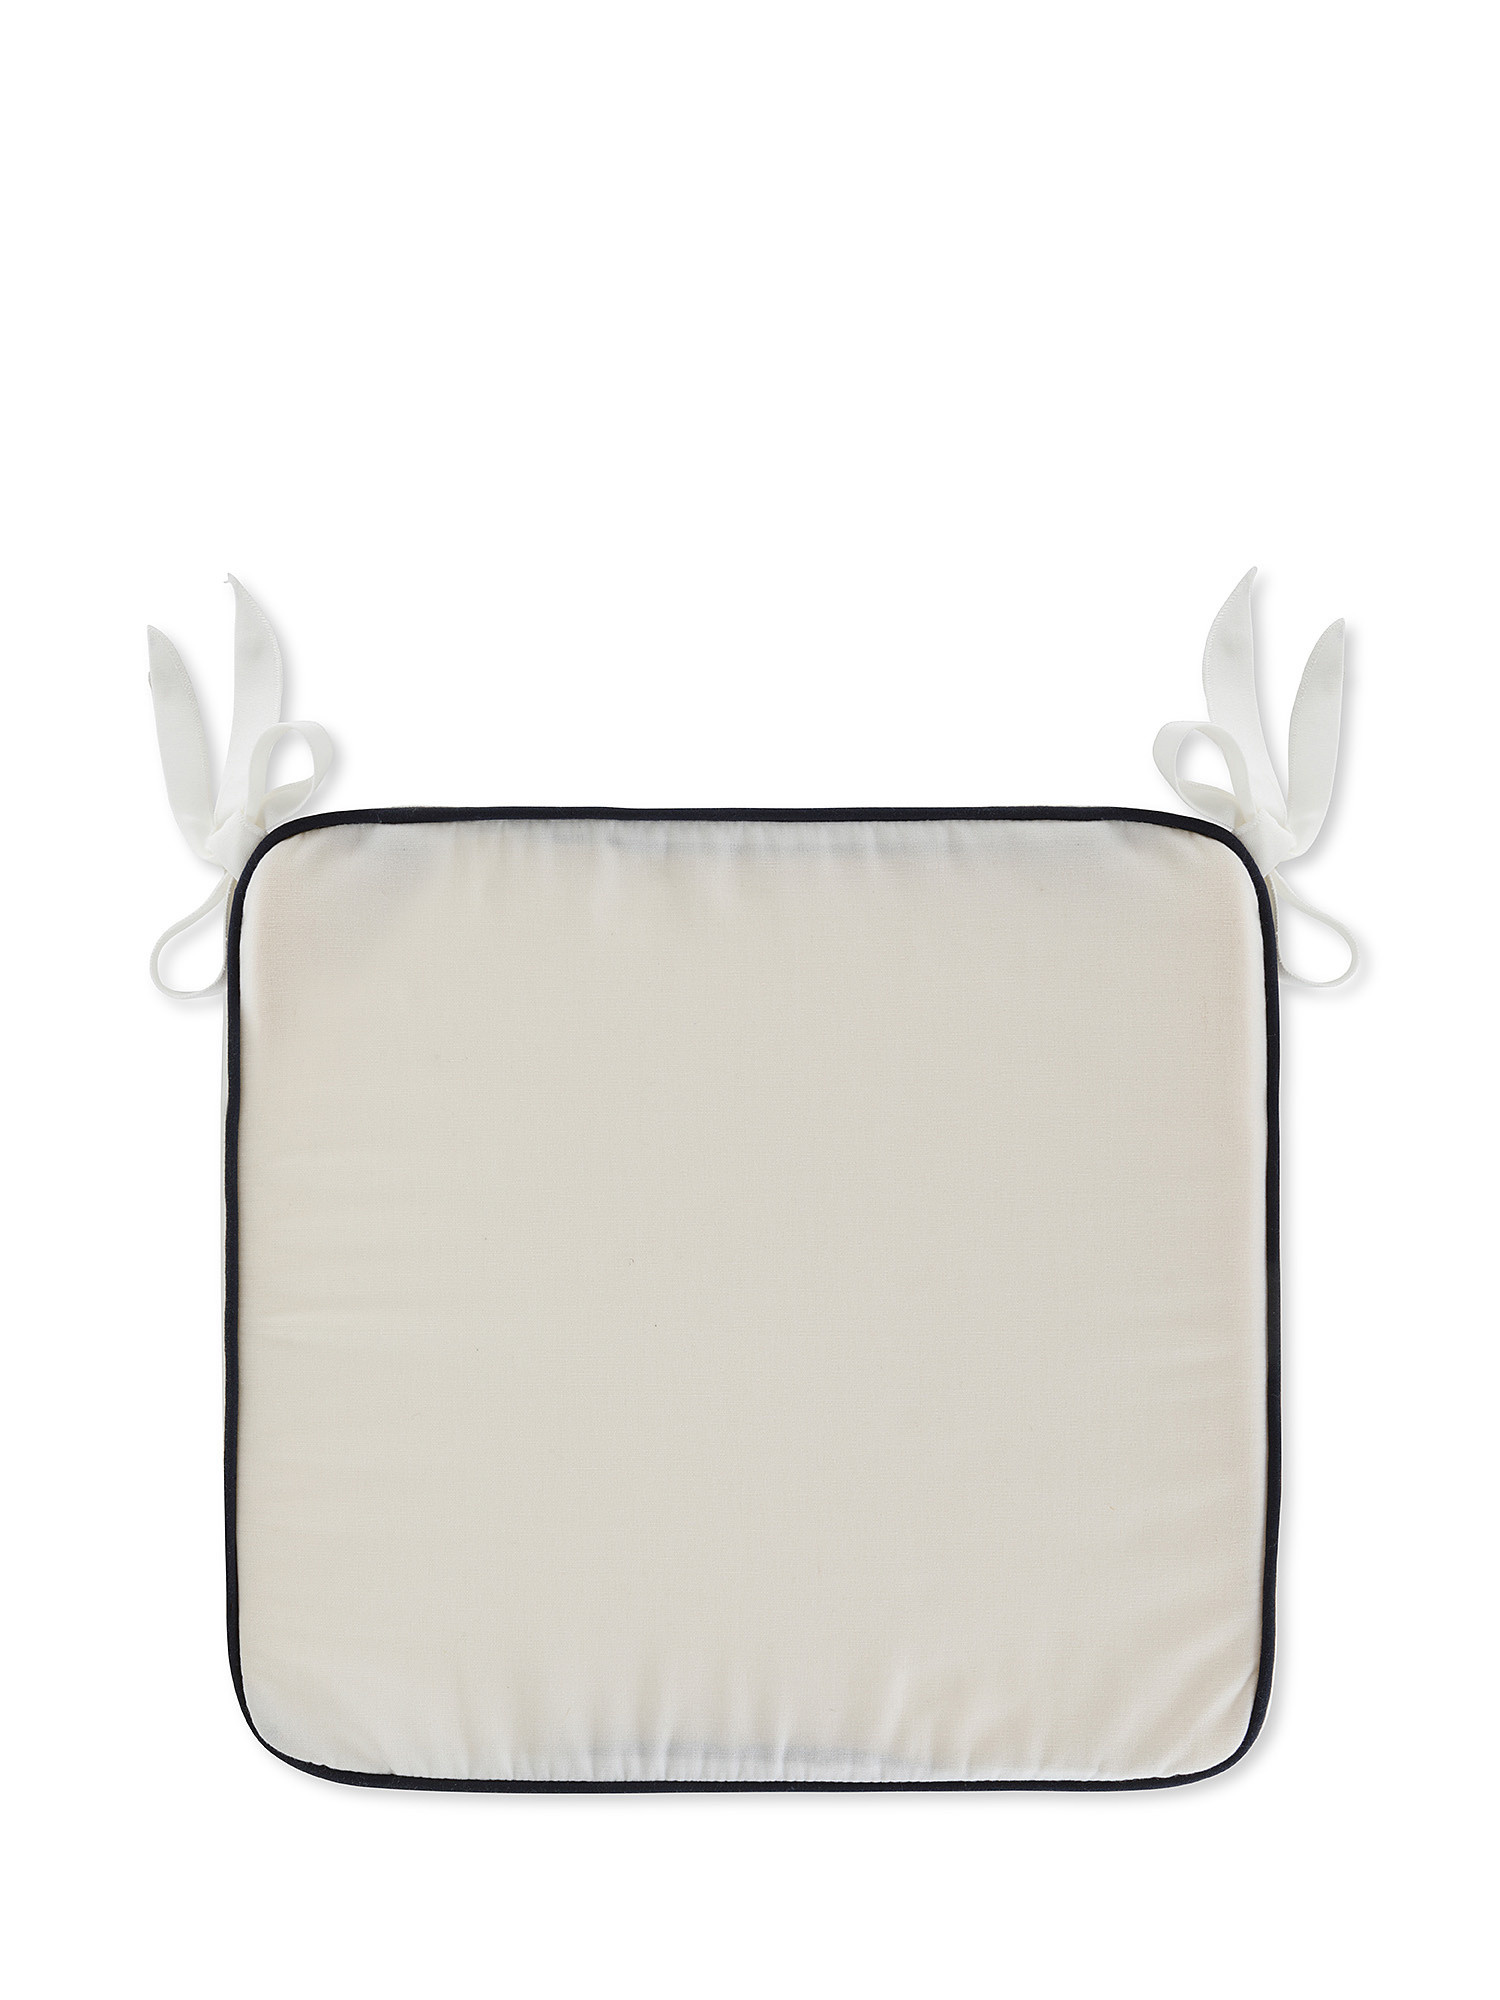 Cuscino da esterno in teflon 42x42cm, Bianco, large image number 0